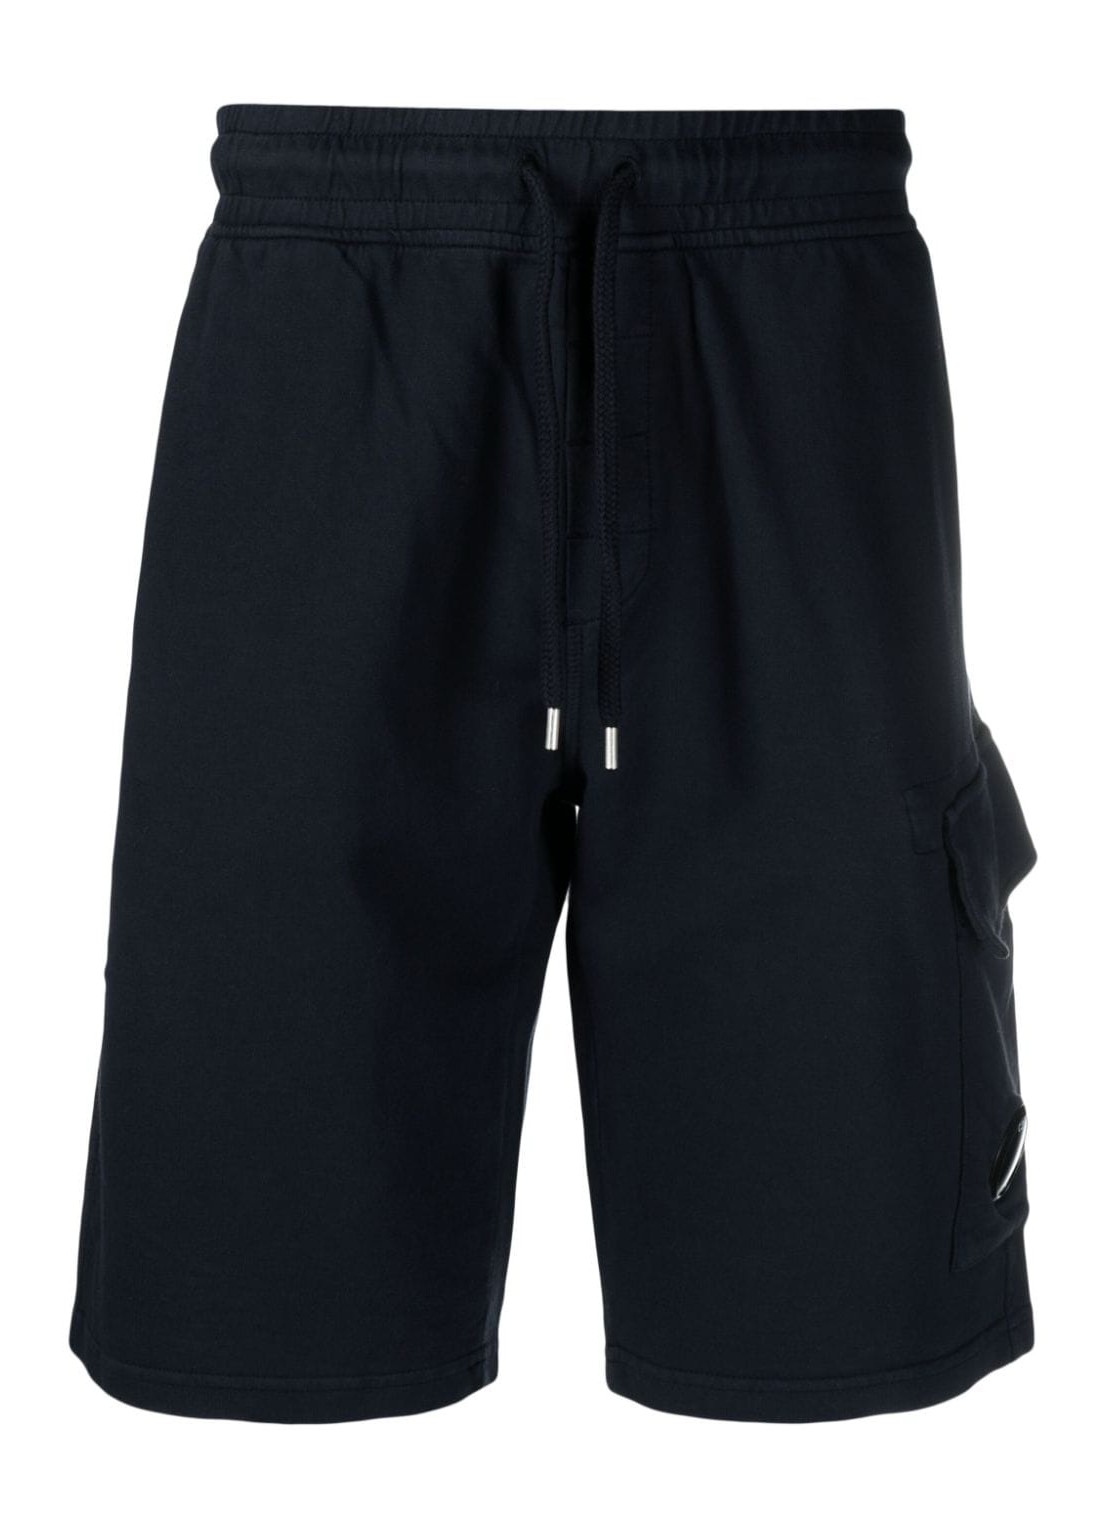 Pantalon corto c.p.company short pant man light fleece utility shorts 16cmsb021a002246g 888 talla Az